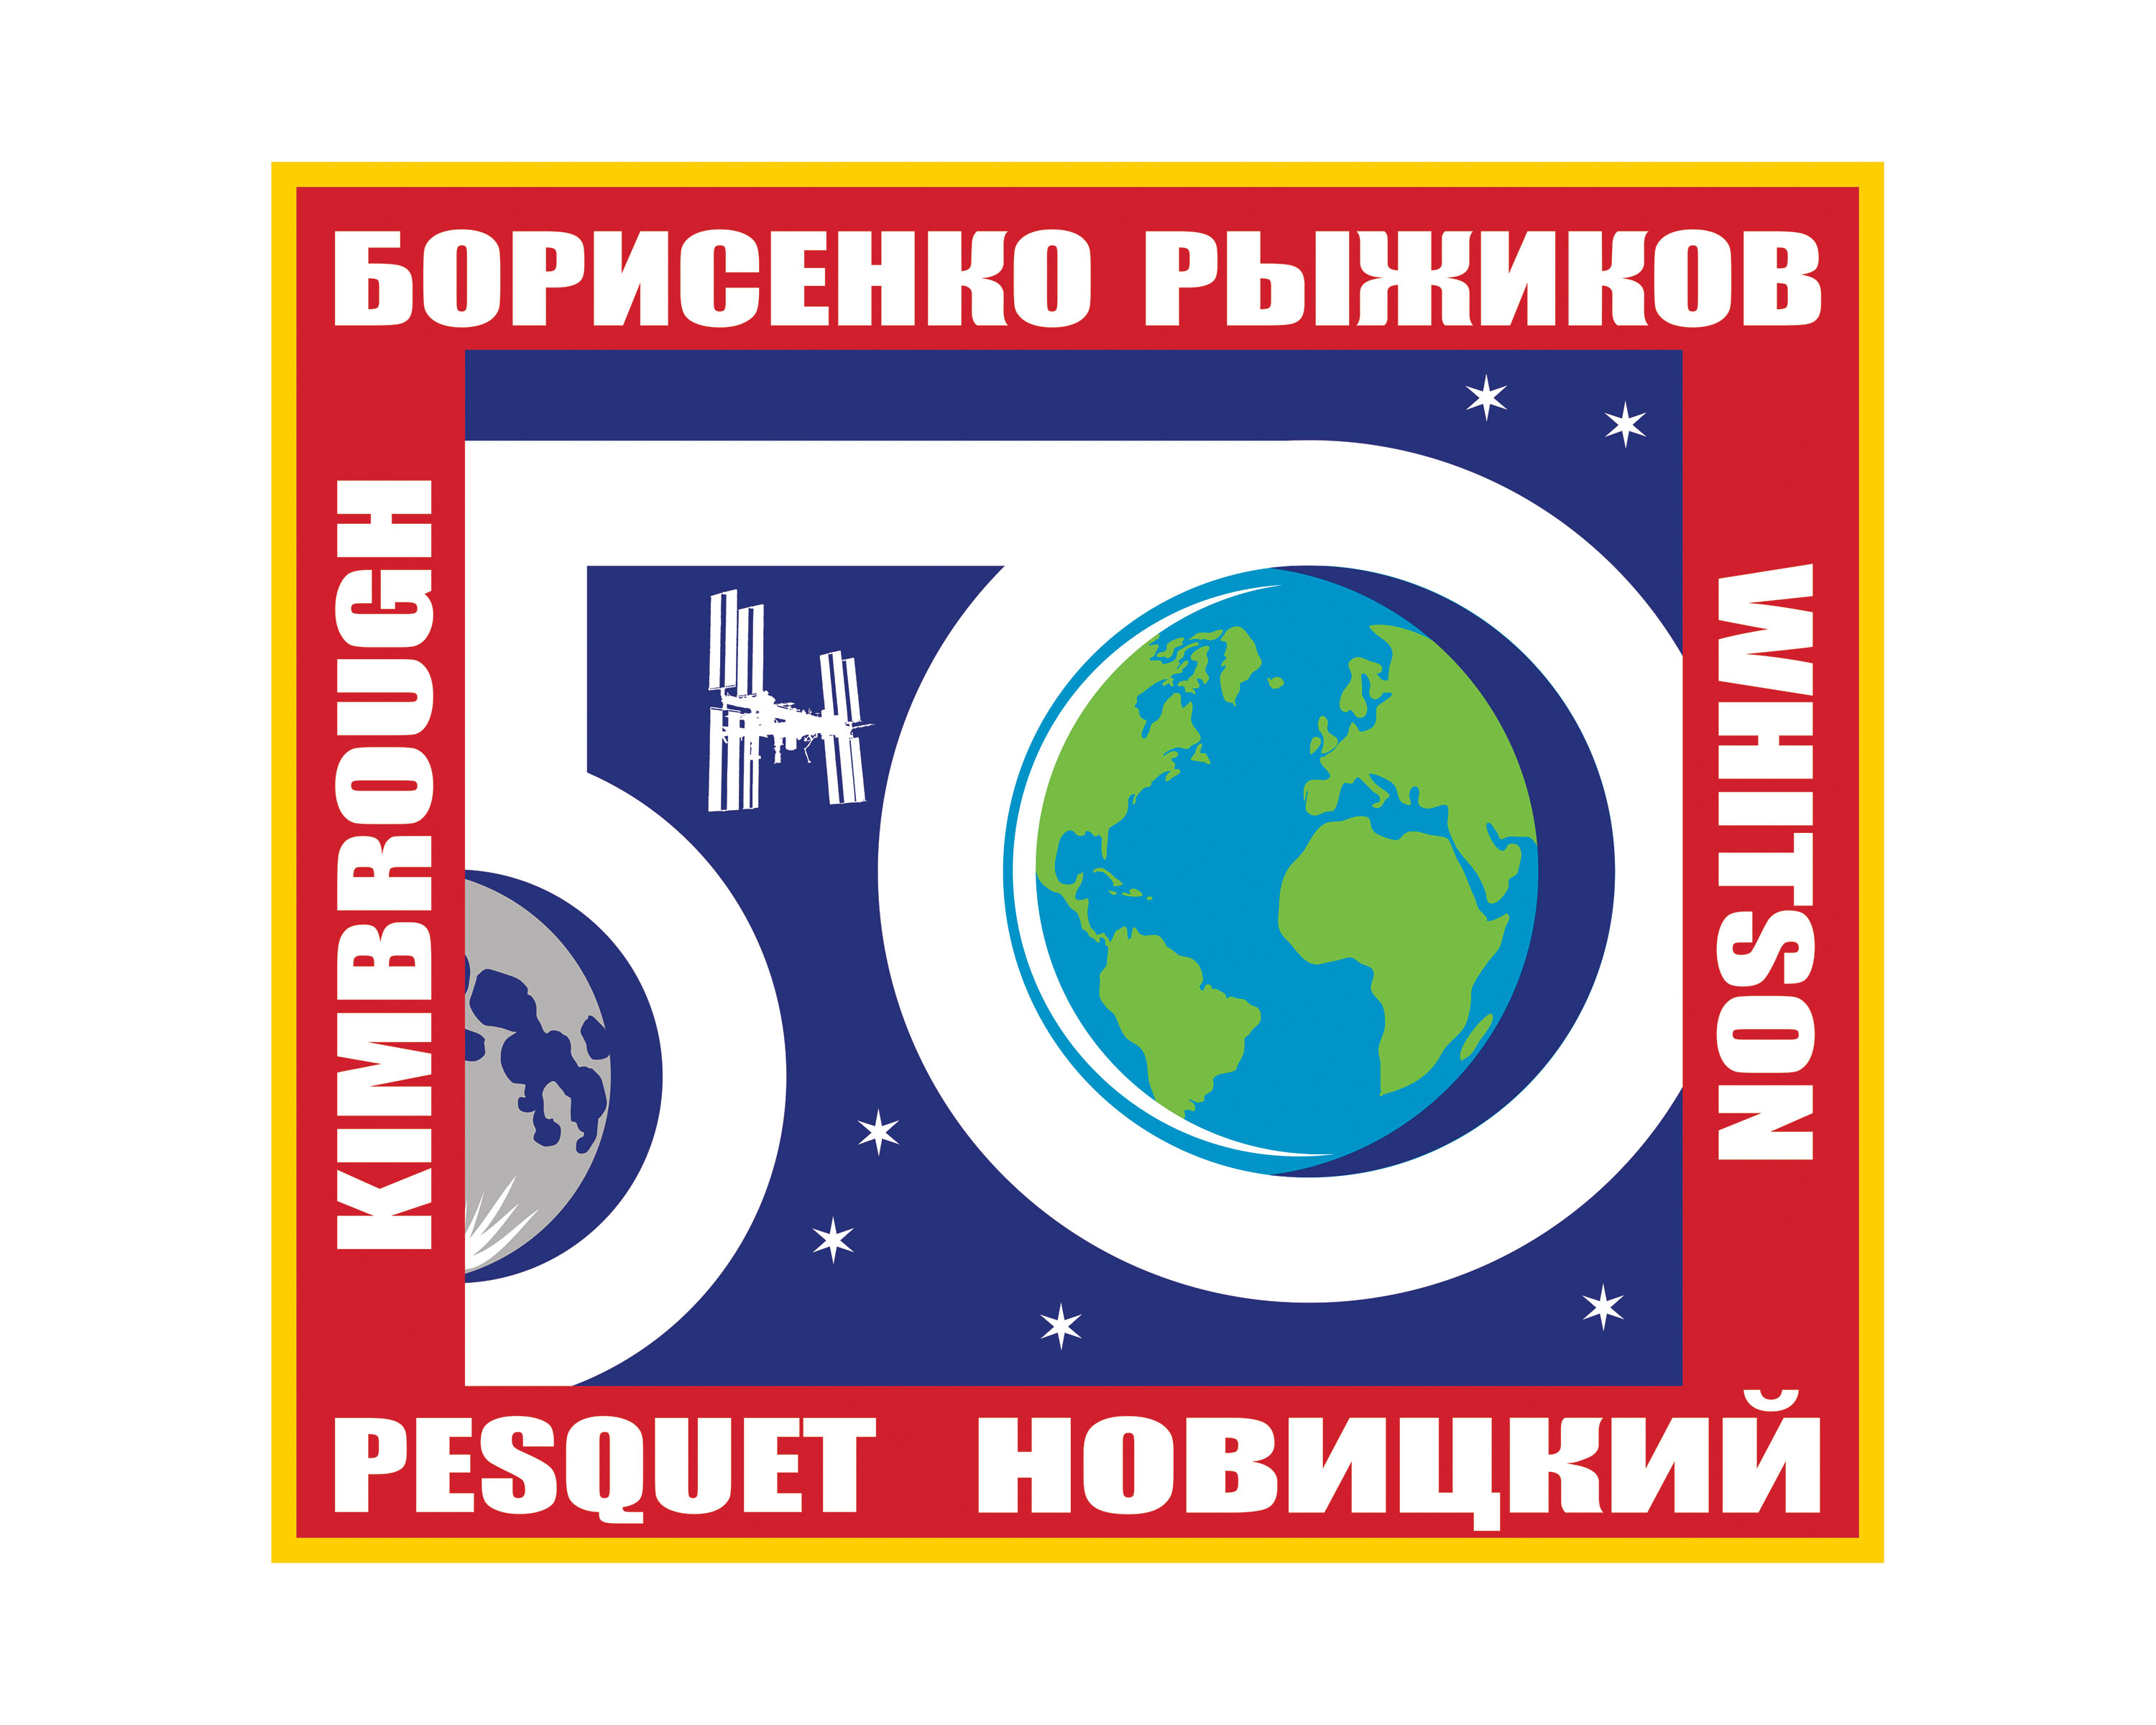 Expedition 50 Crew Patch - Credit: NASA/Roscosmos